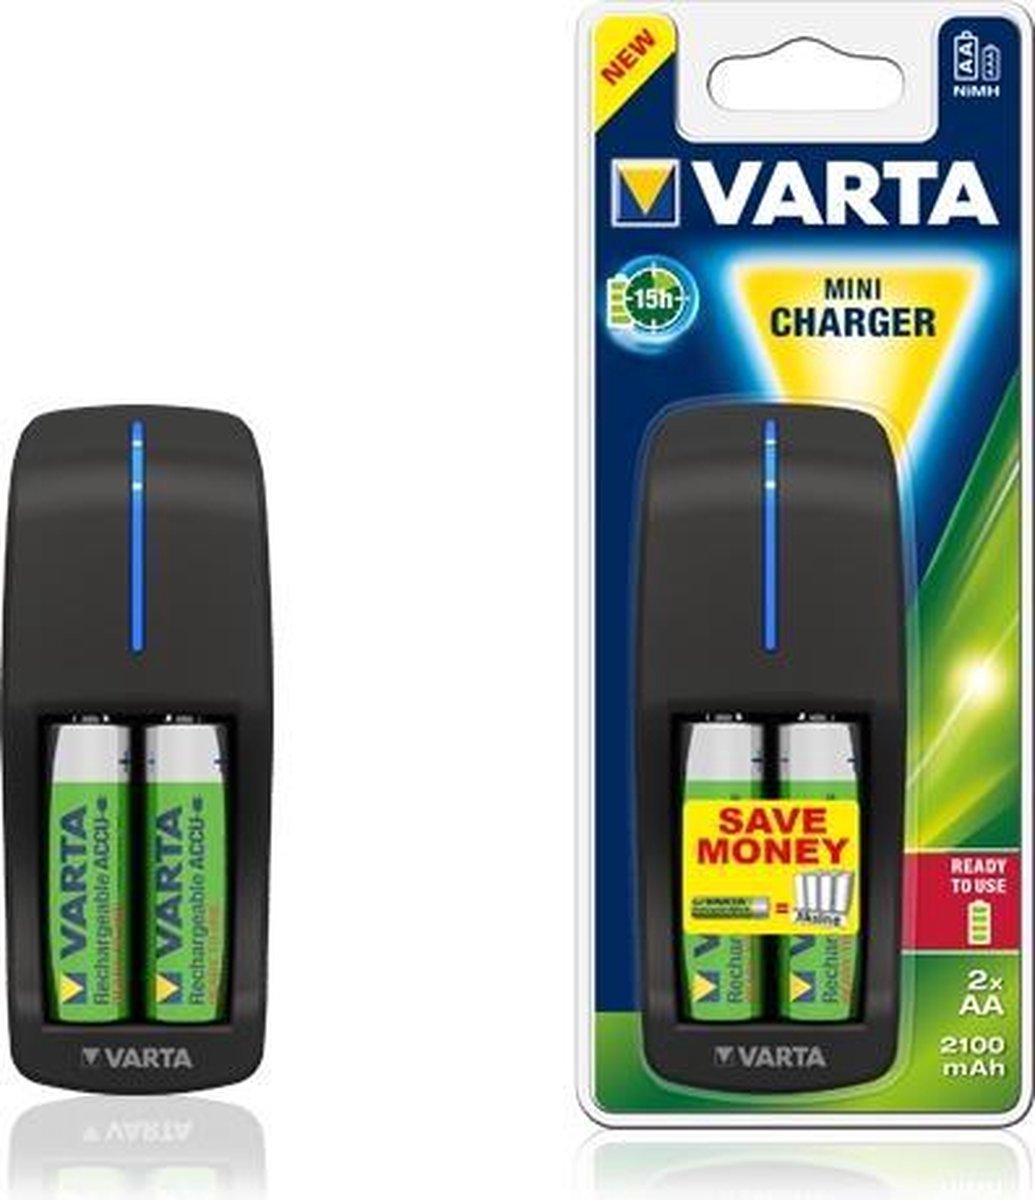 Chargeur Varta Mini avec 2 piles AAA 800mAh - Bestpiles